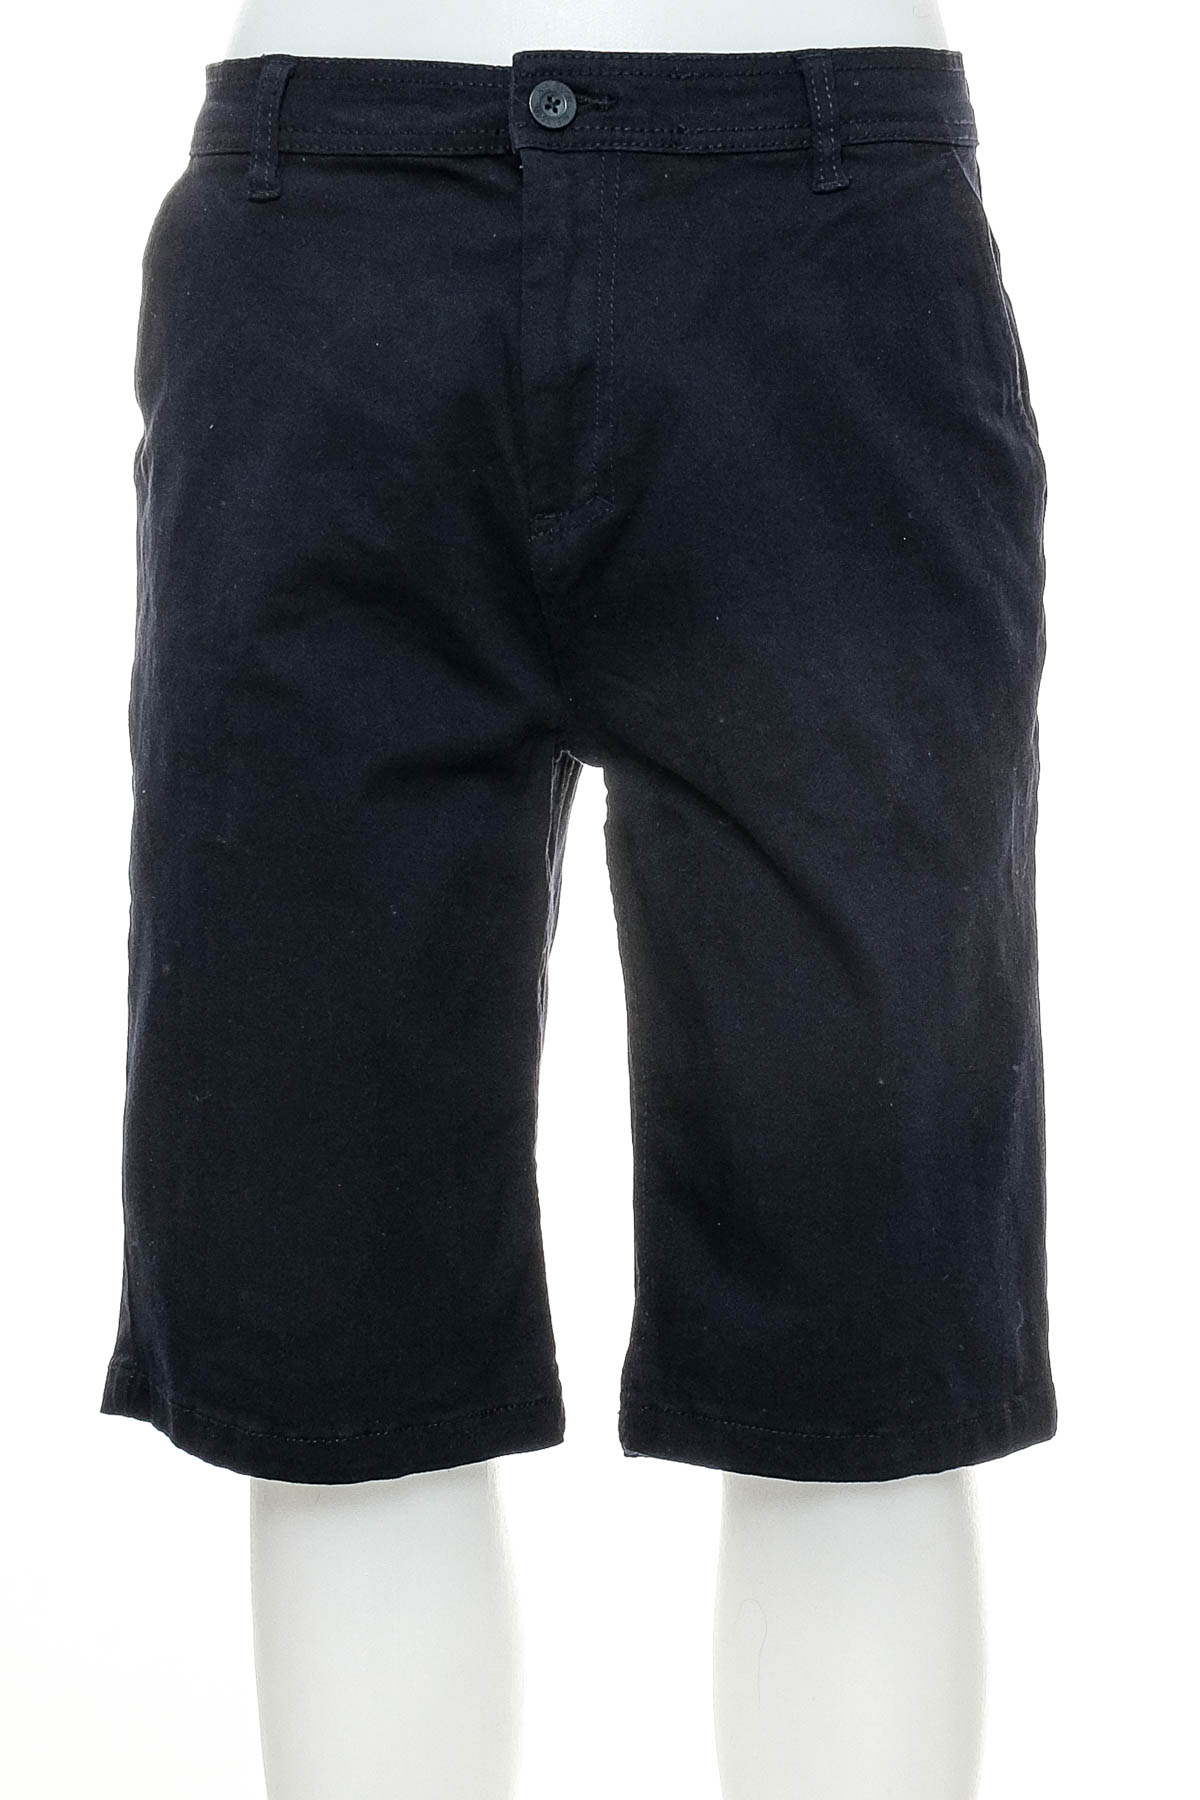 Men's shorts - Nielsson - 0